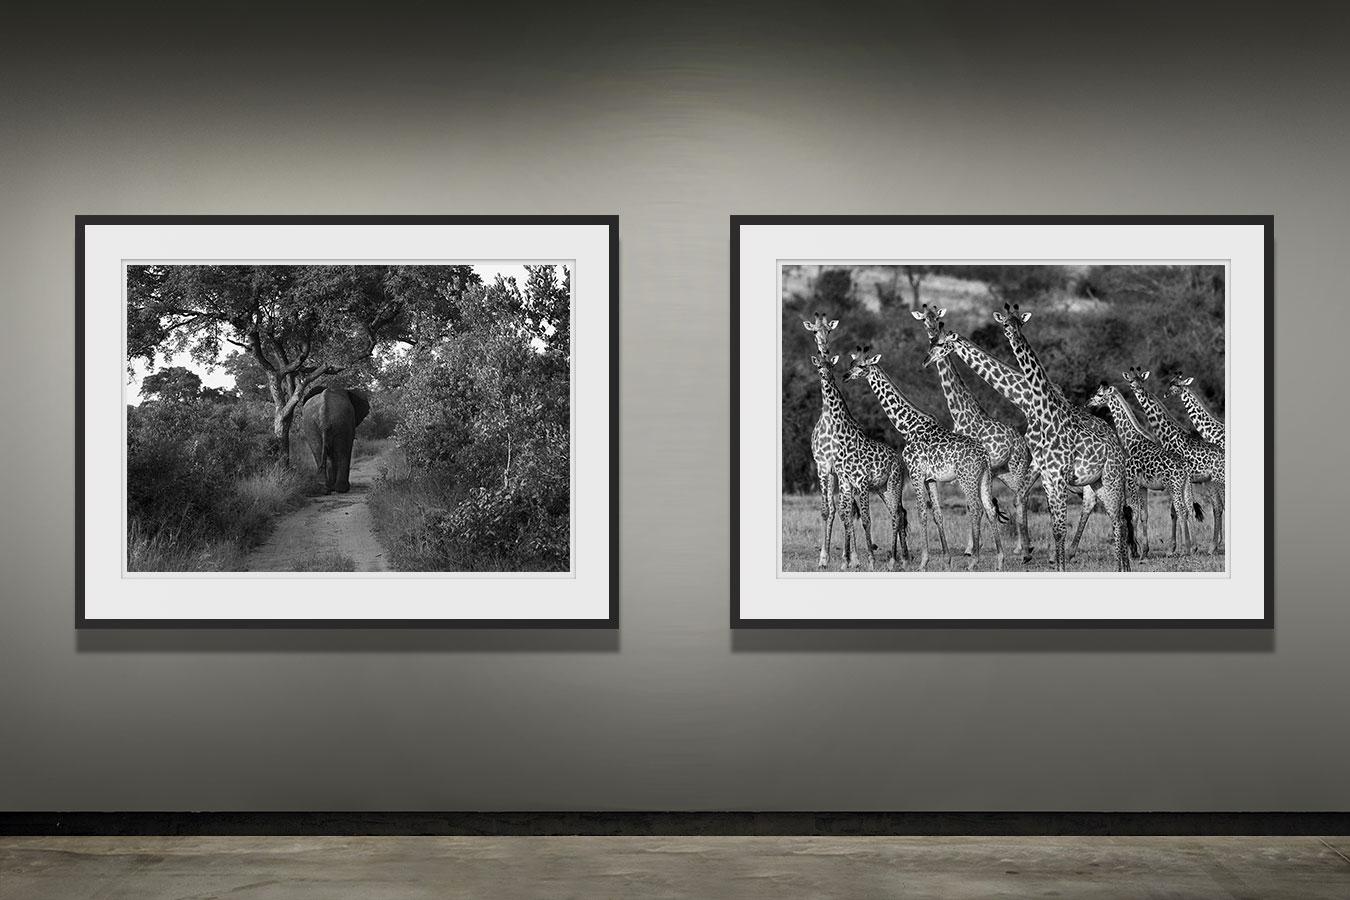 Elephant, Zimbabwe, Africa Wildlife - Contemporary Photograph by Araquém Alcântara